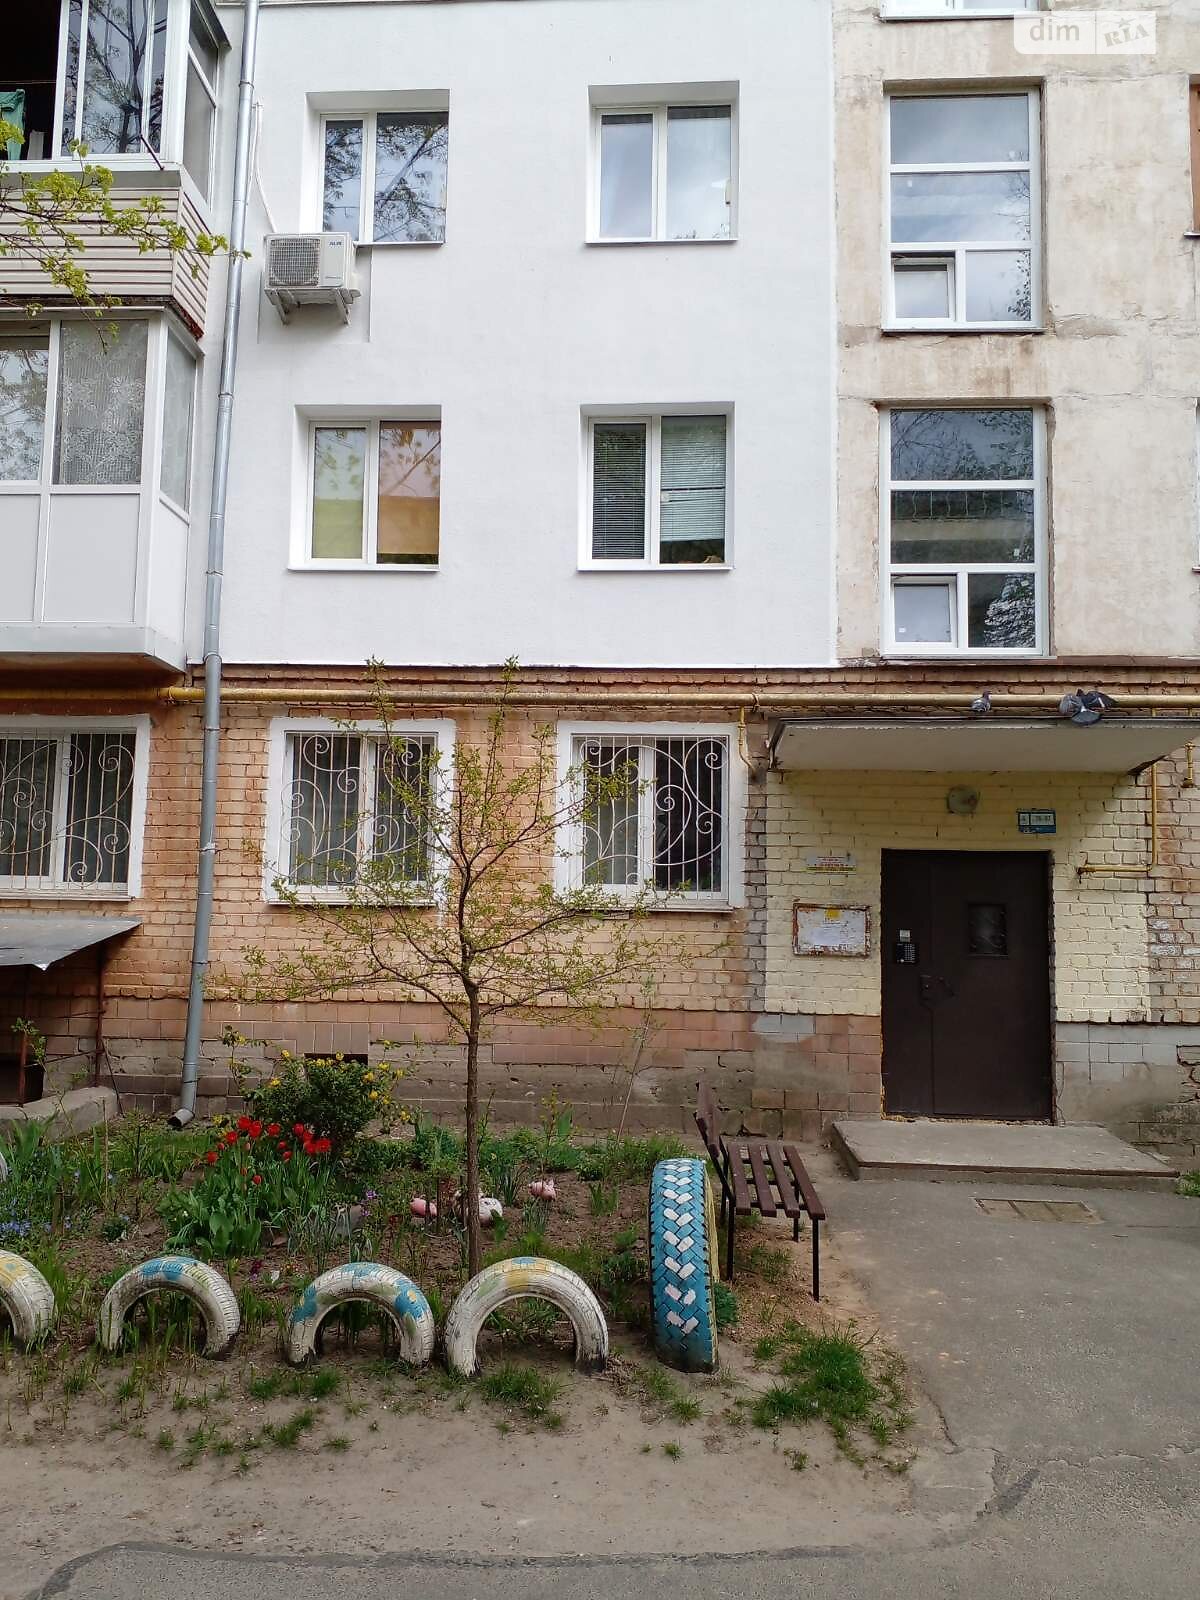 Продажа трехкомнатной квартиры в Чернигове, на ул. Спасателей 31, район Ремзавод фото 1